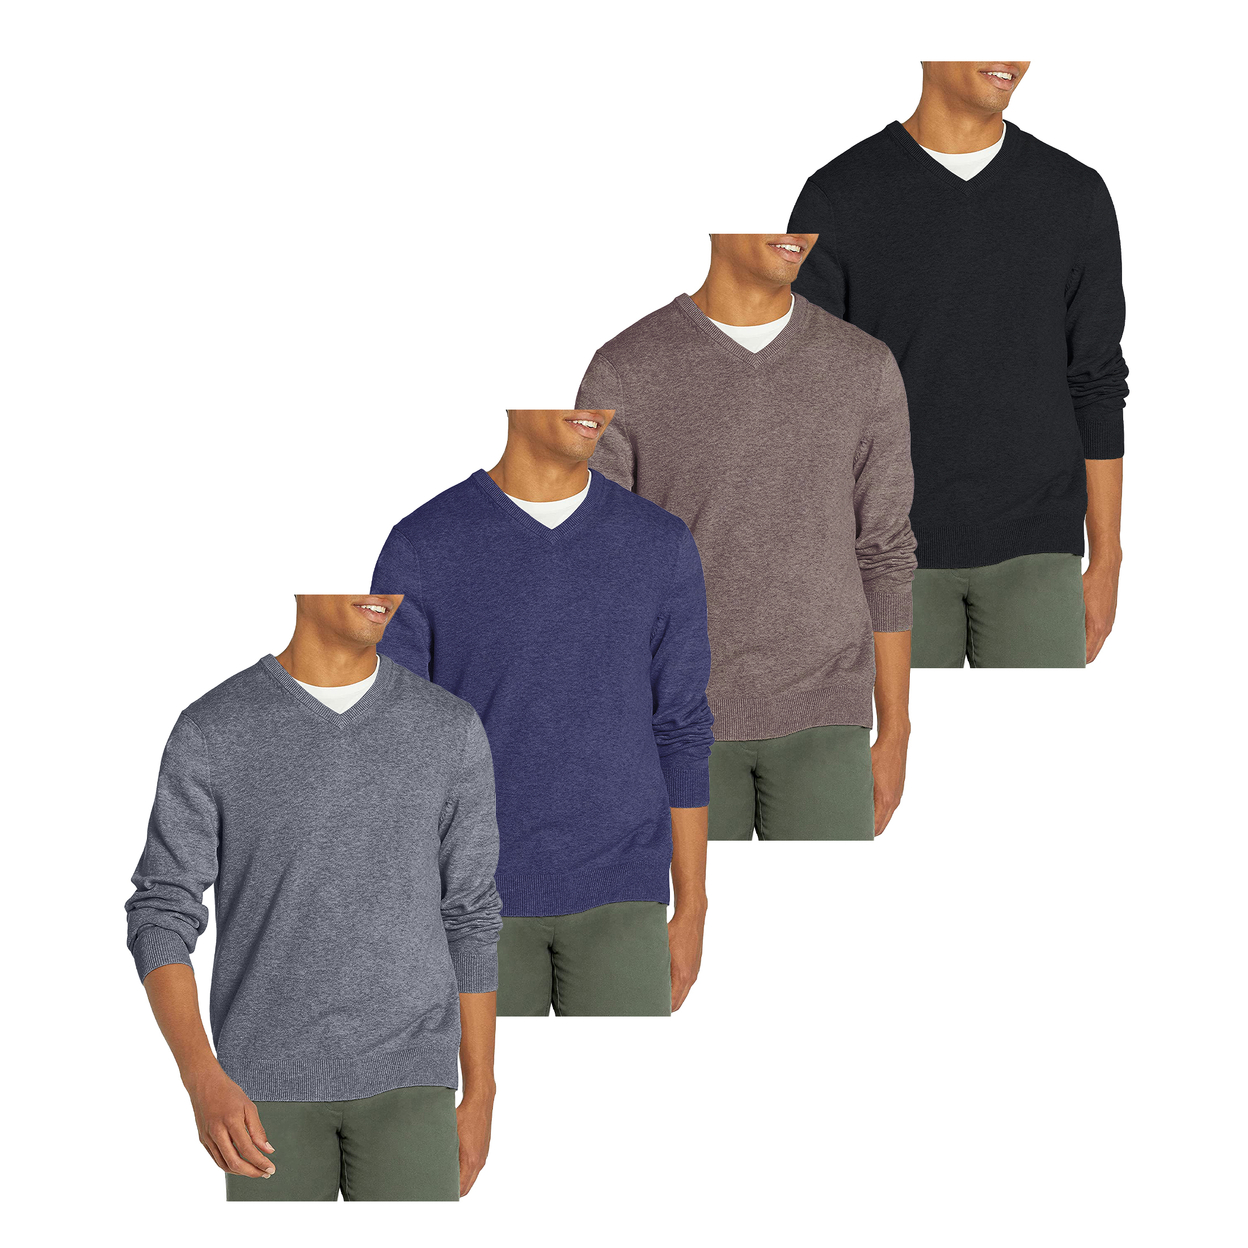 2-Pack: Men's Casual Ultra Soft Slim Fit Warm Knit V-Neck Sweater - Black & Brown, Medium